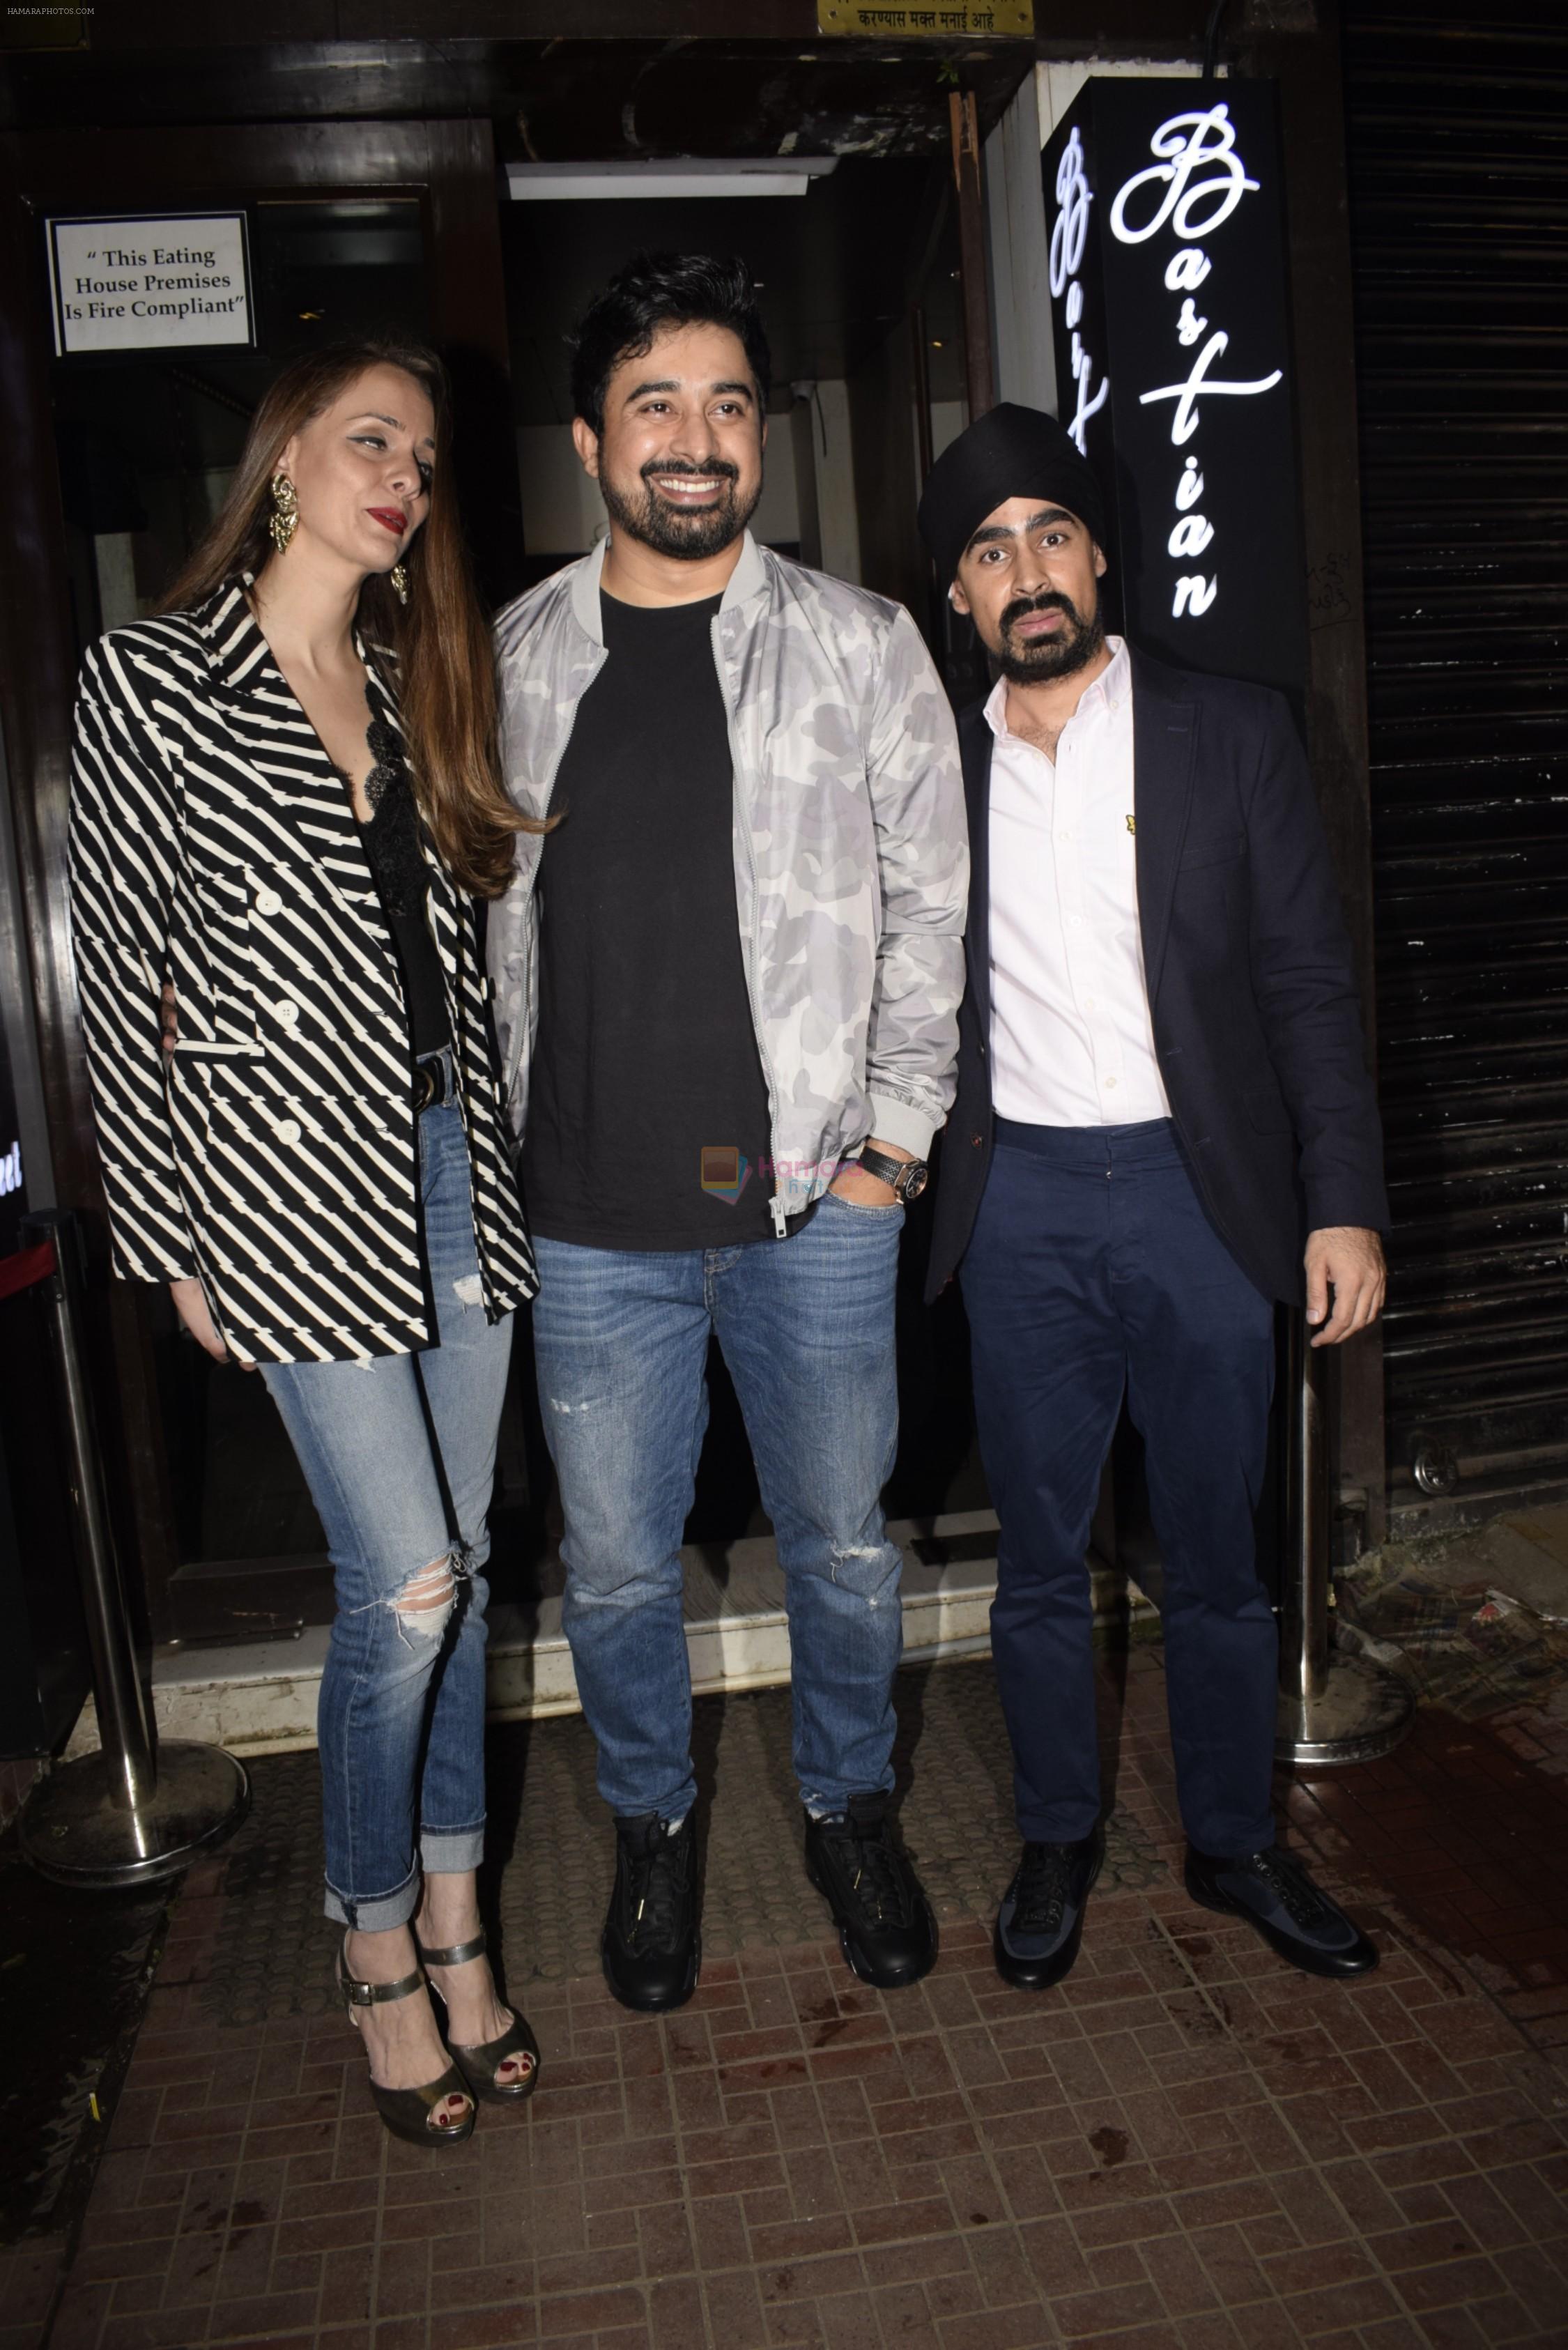 Rannvijay Singh at Soha Ali Khan's birthday party in Bastian, bandra on 3rd Oct 2018